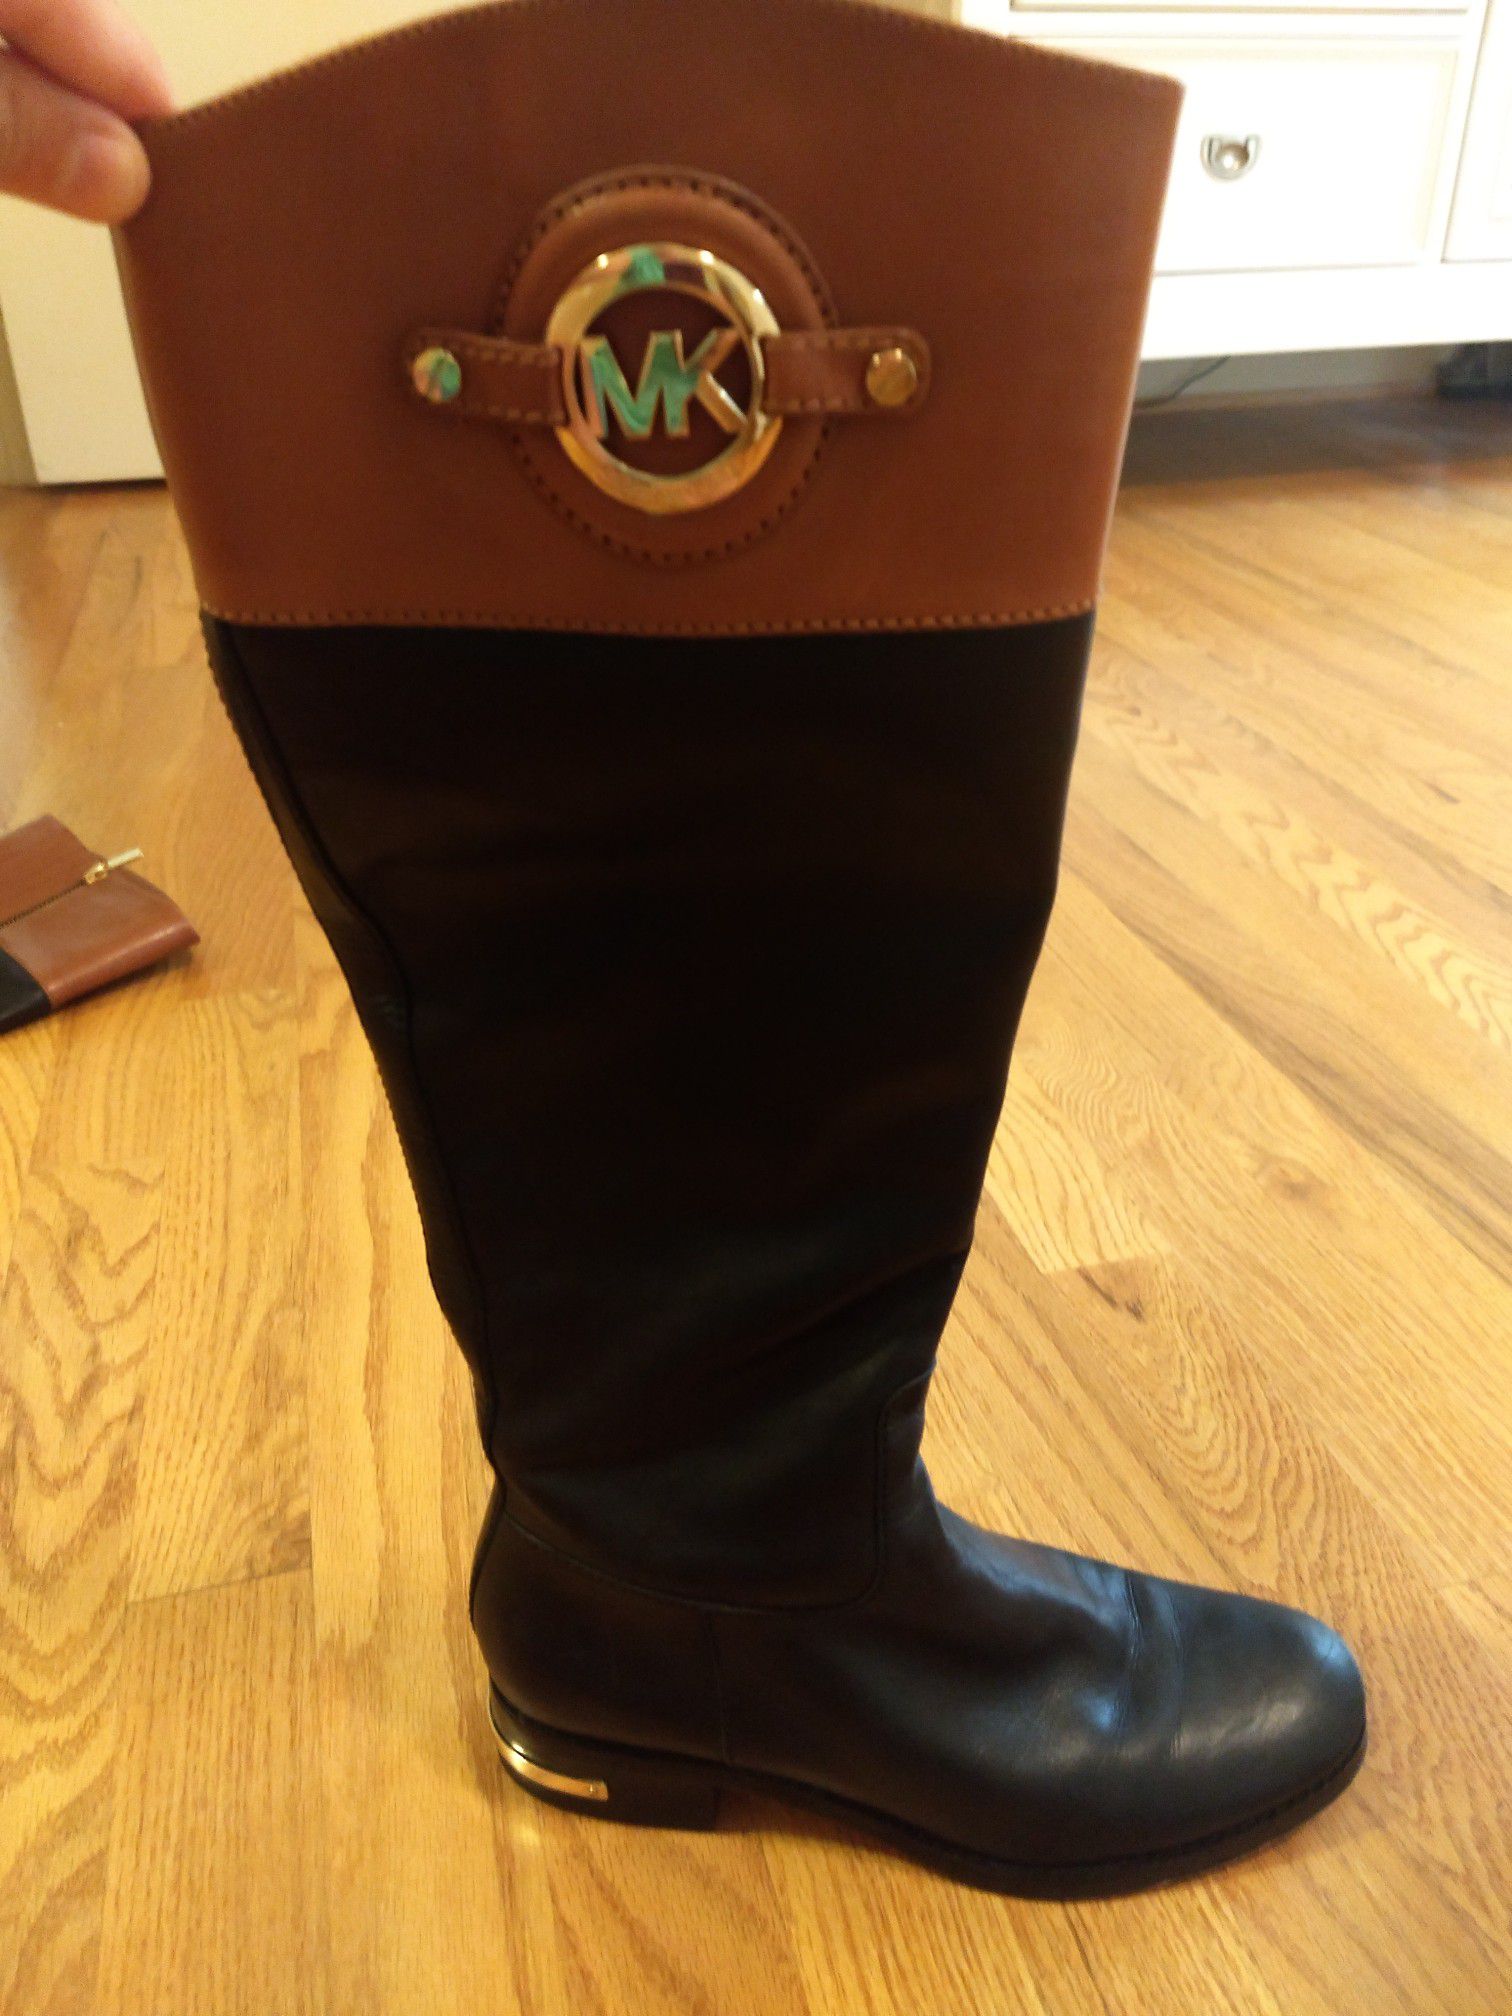 Michael kors boots